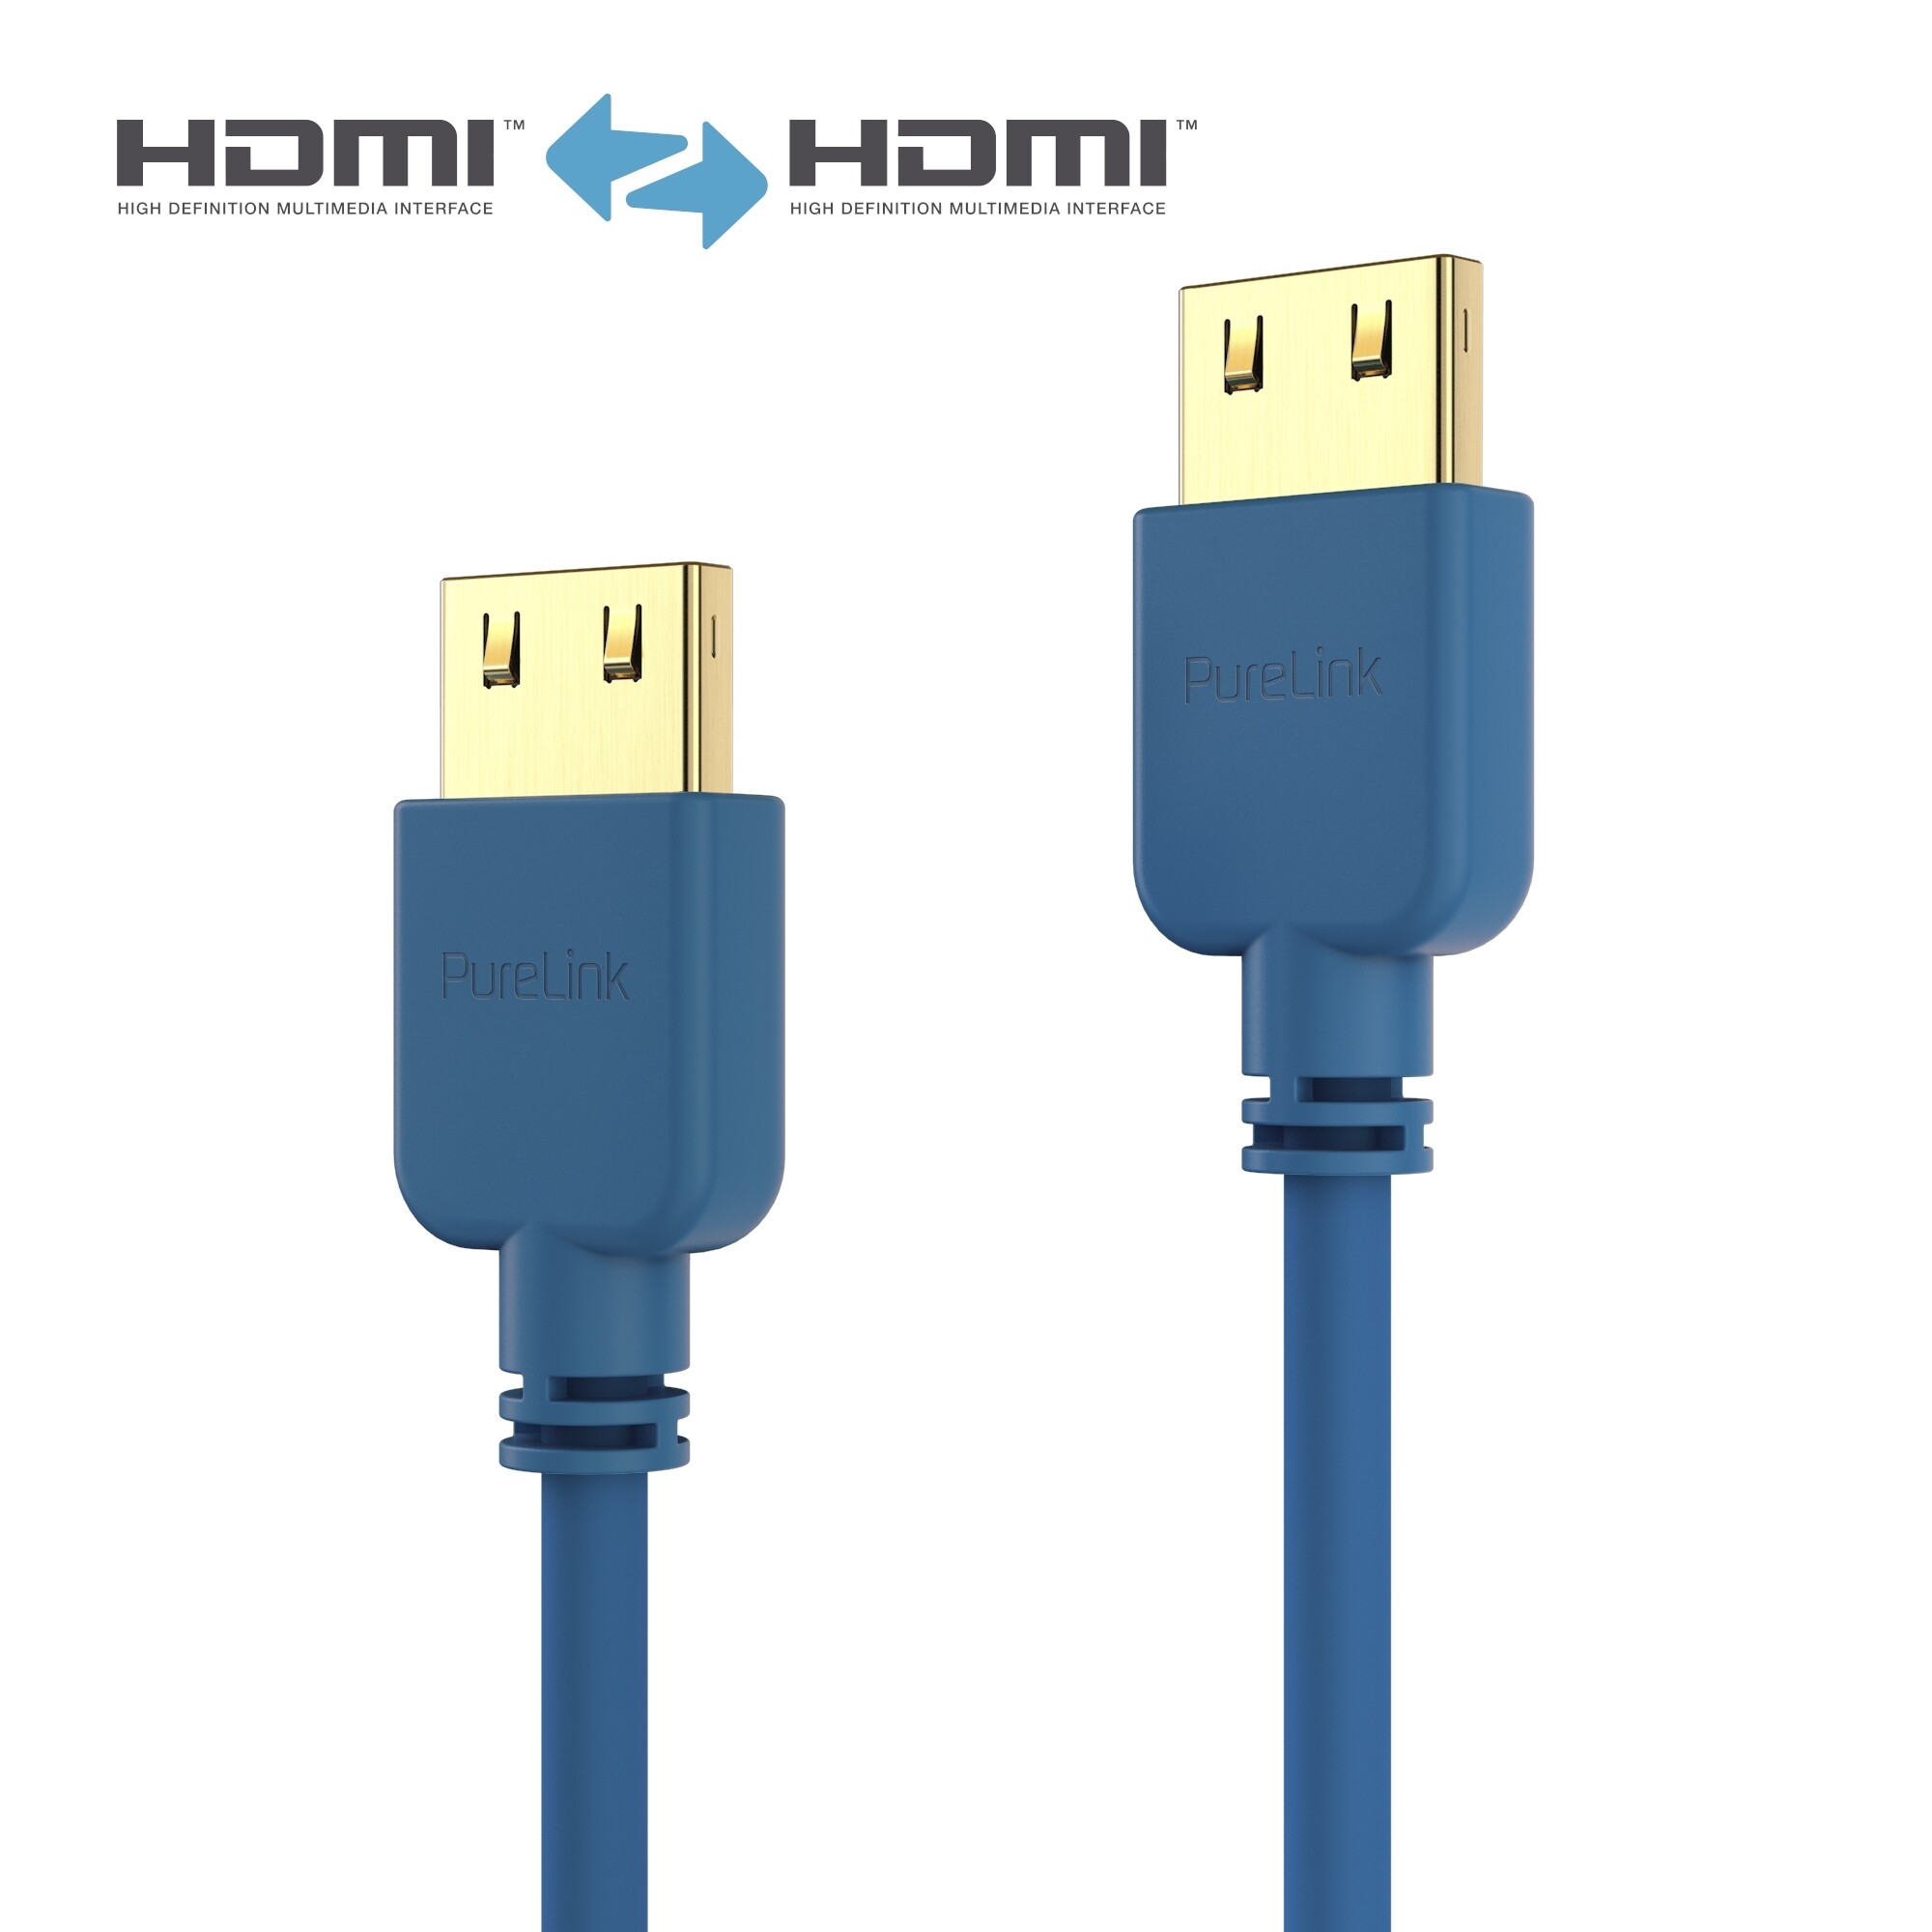 Purelink-PI0502-003-HDMI-Kabel-SuperThin-0-3m-blau